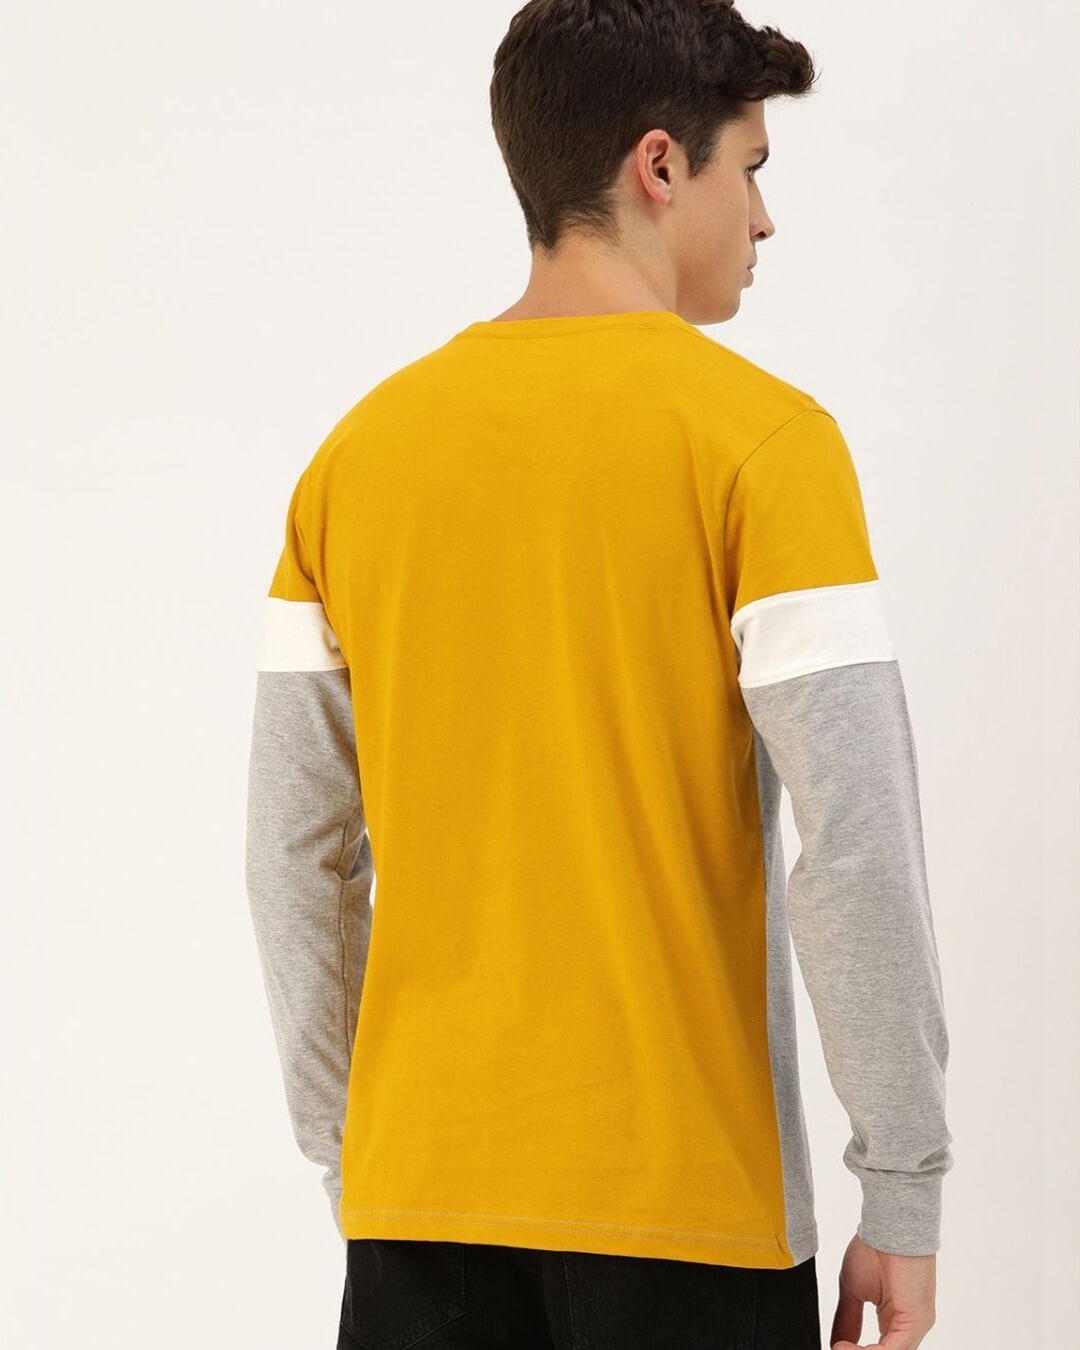 Shop Men's Yellow Colourblocked T-shirt